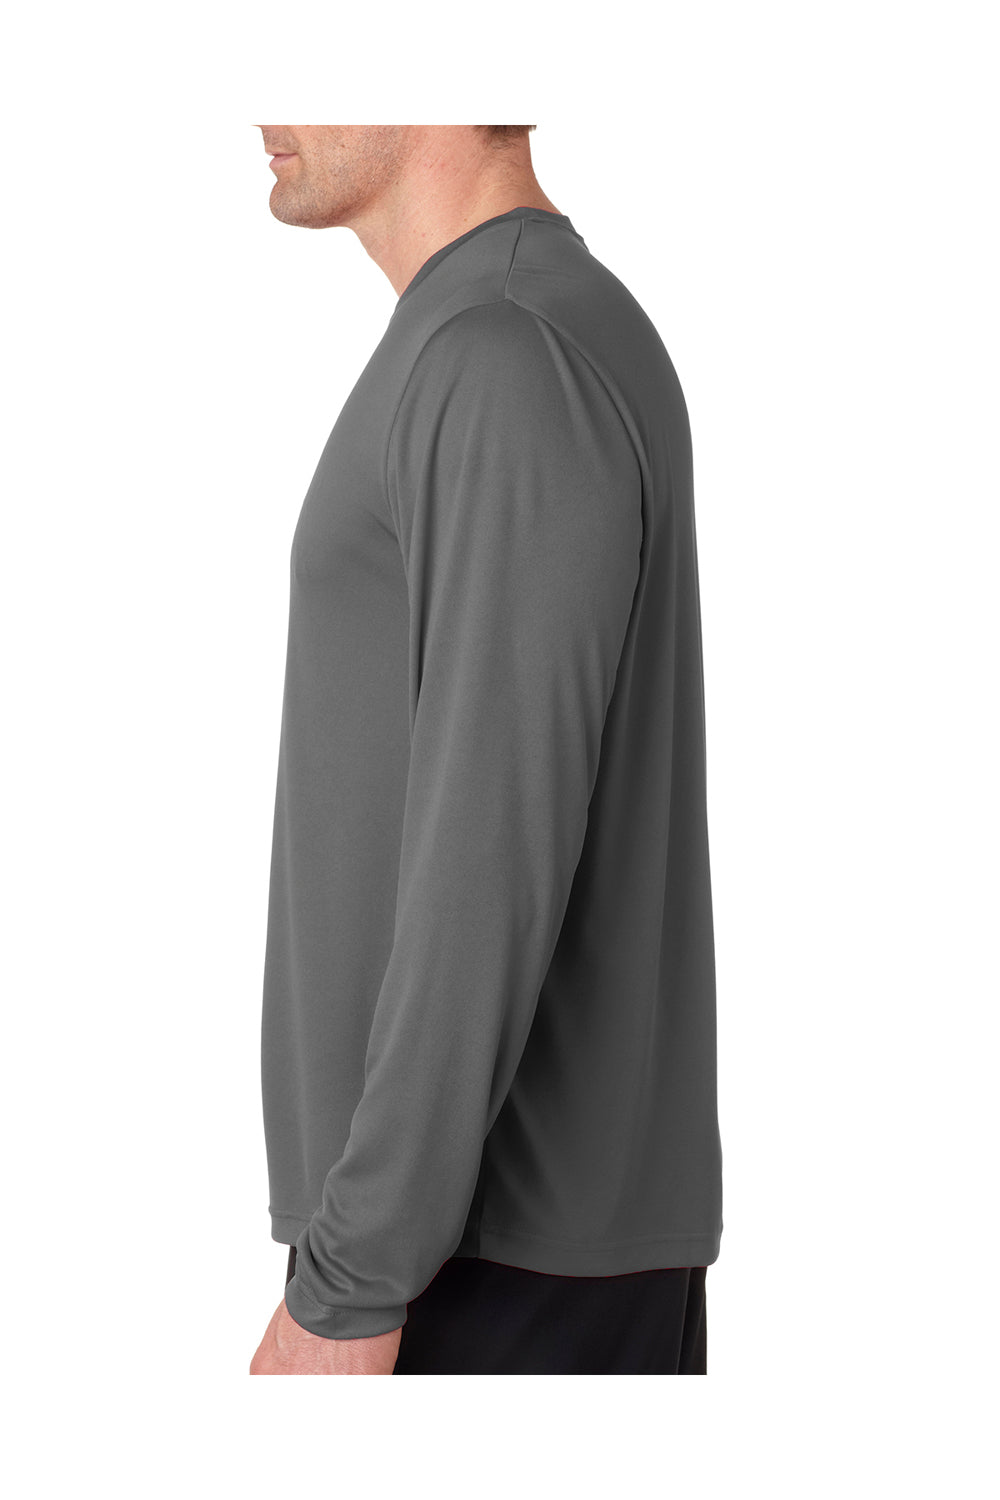 Hanes 482L Mens Cool DRI FreshIQ Moisture Wicking Long Sleeve Crewneck T-Shirt Graphite Grey Side